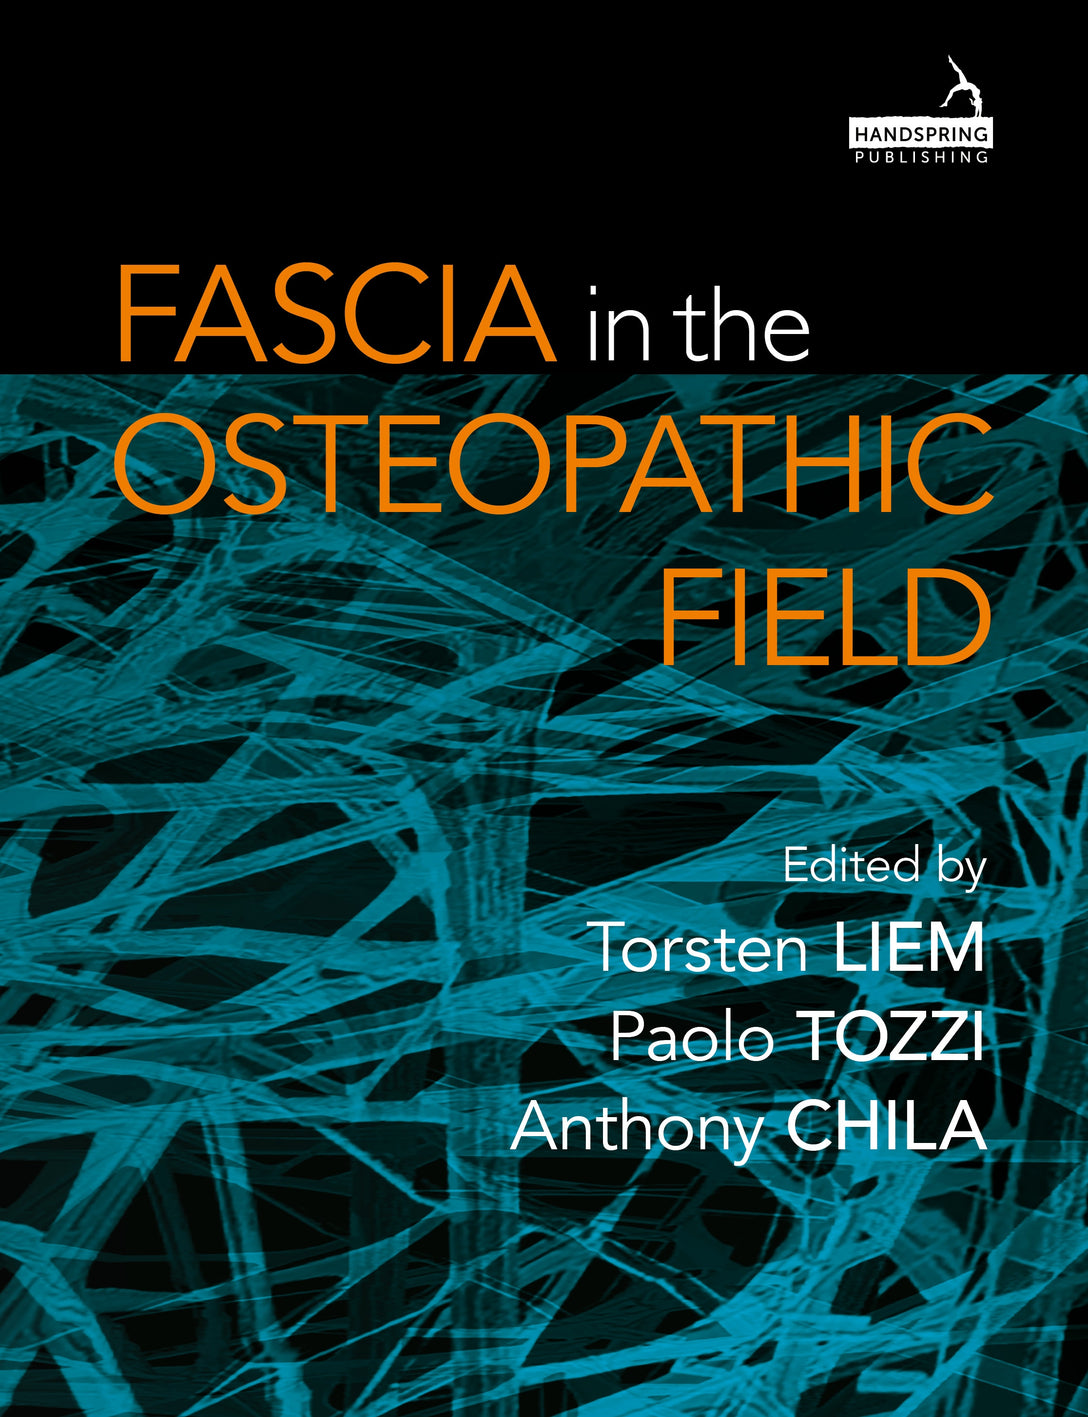 Fascia in the Osteopathic Field by Paolo Tozzi, Torsten Liem, Anthony Chila